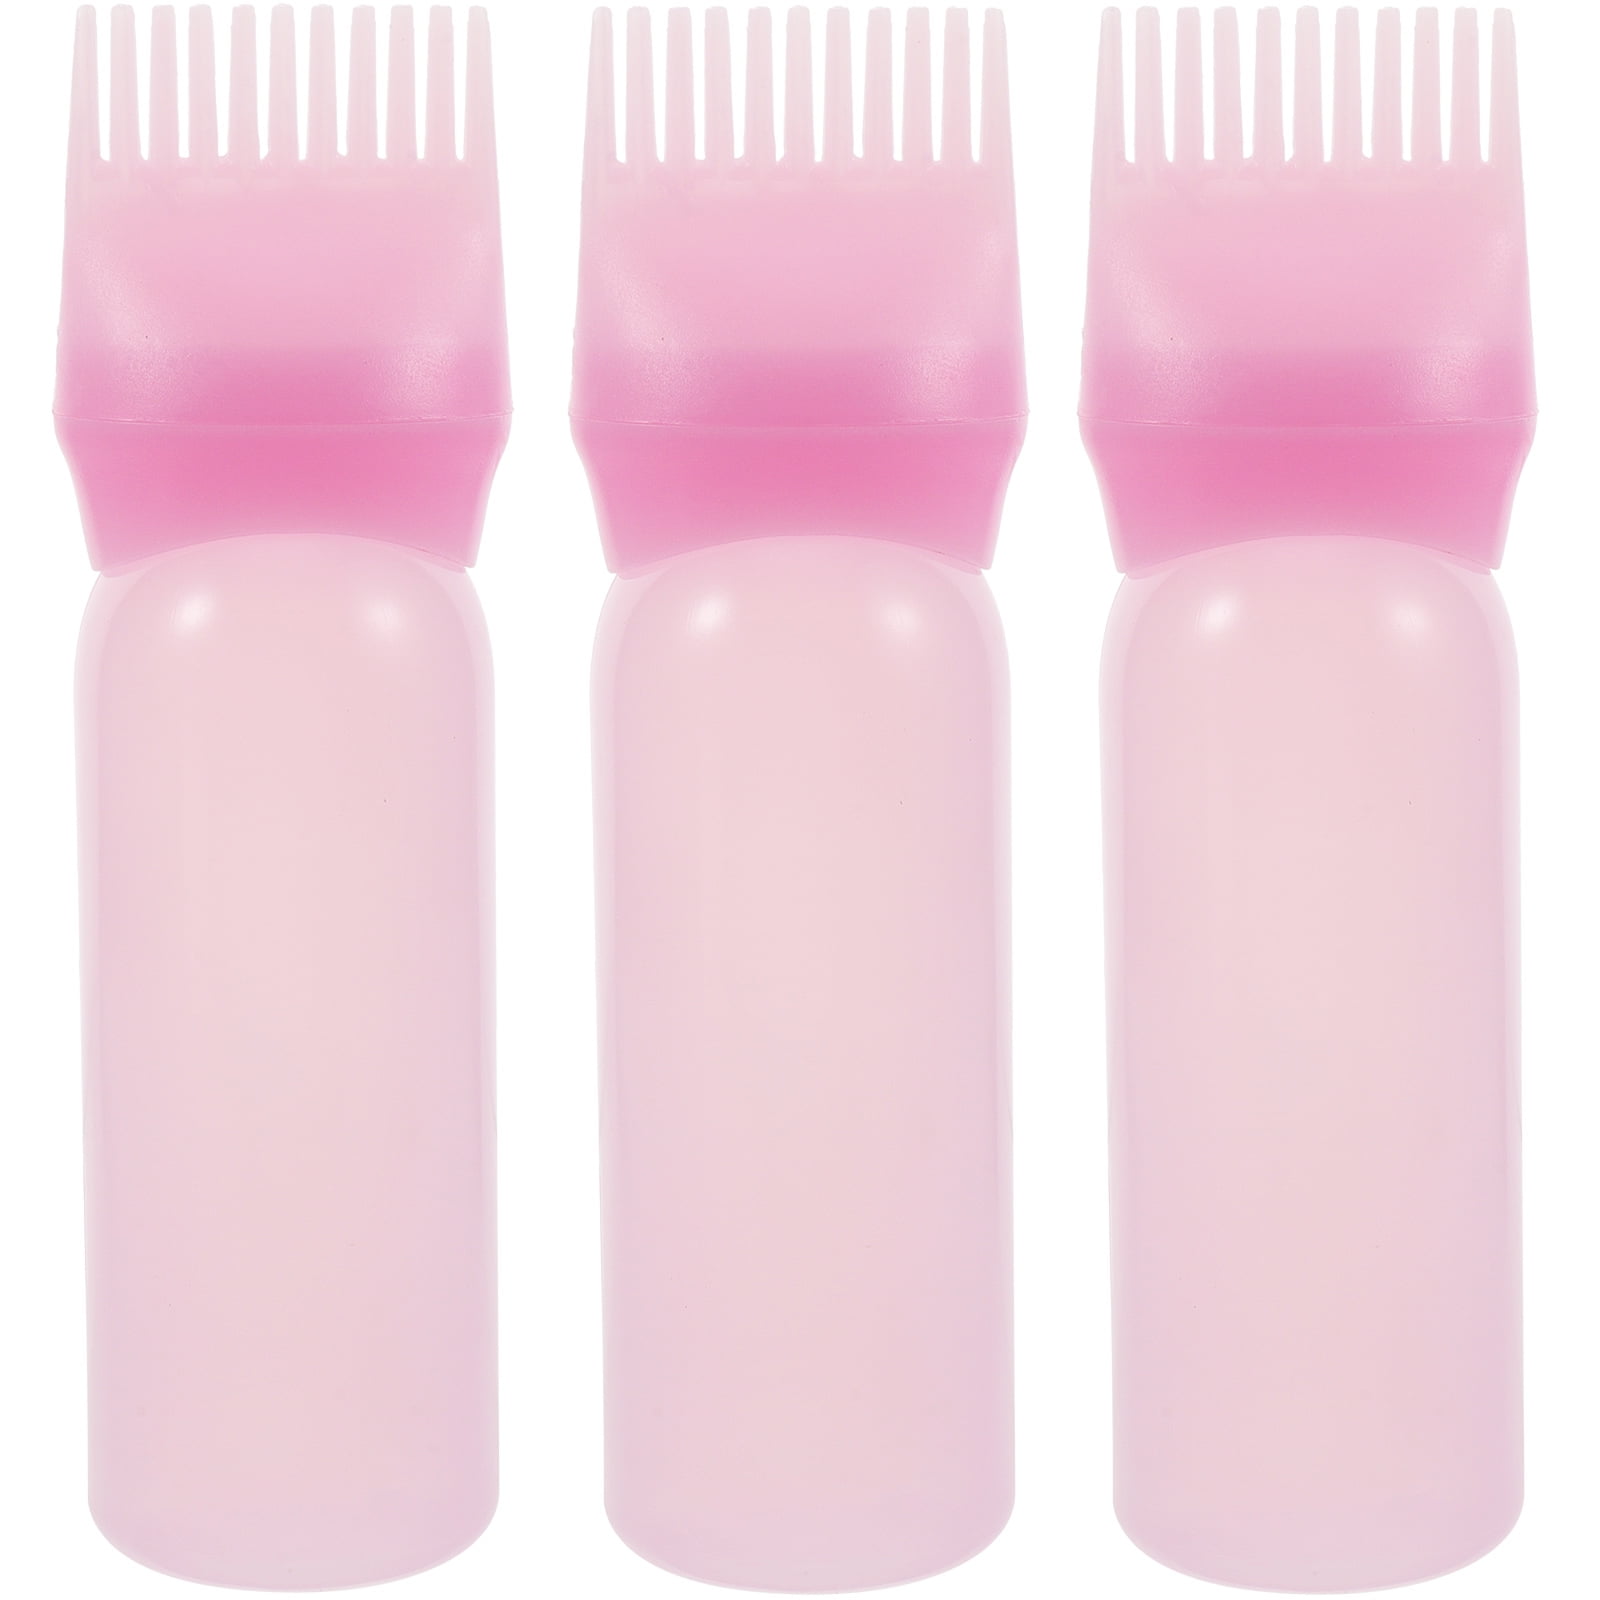 3PCS hair oil applicator Salon Tools Practical Hair Dye Supplies Root Comb